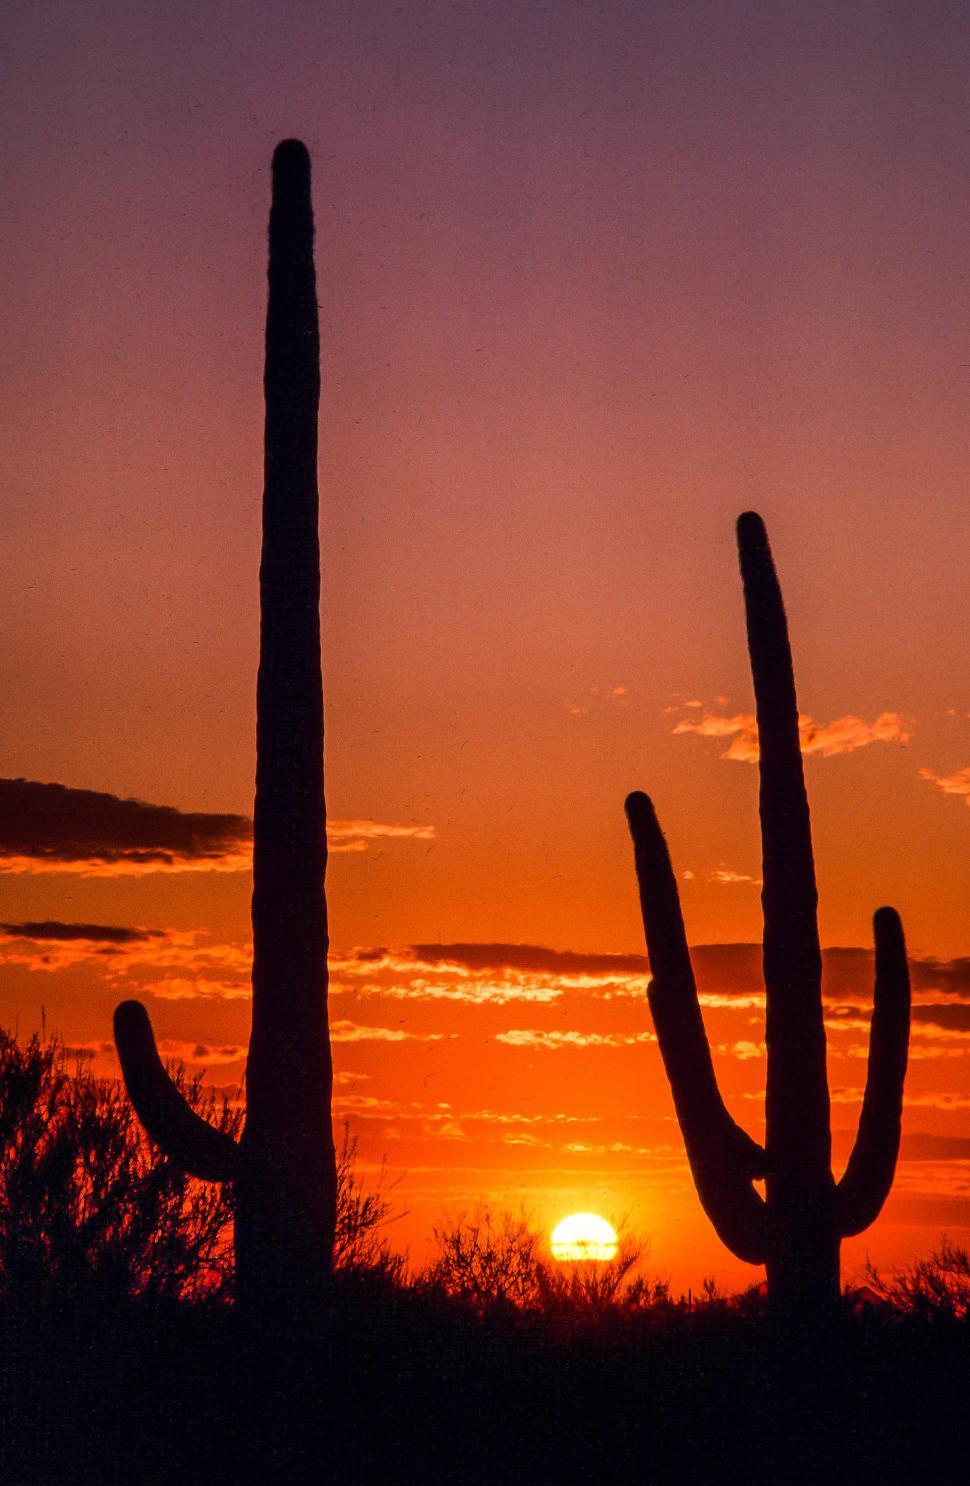 Free Image of Saguaro Cactus and sunset in Arizona 